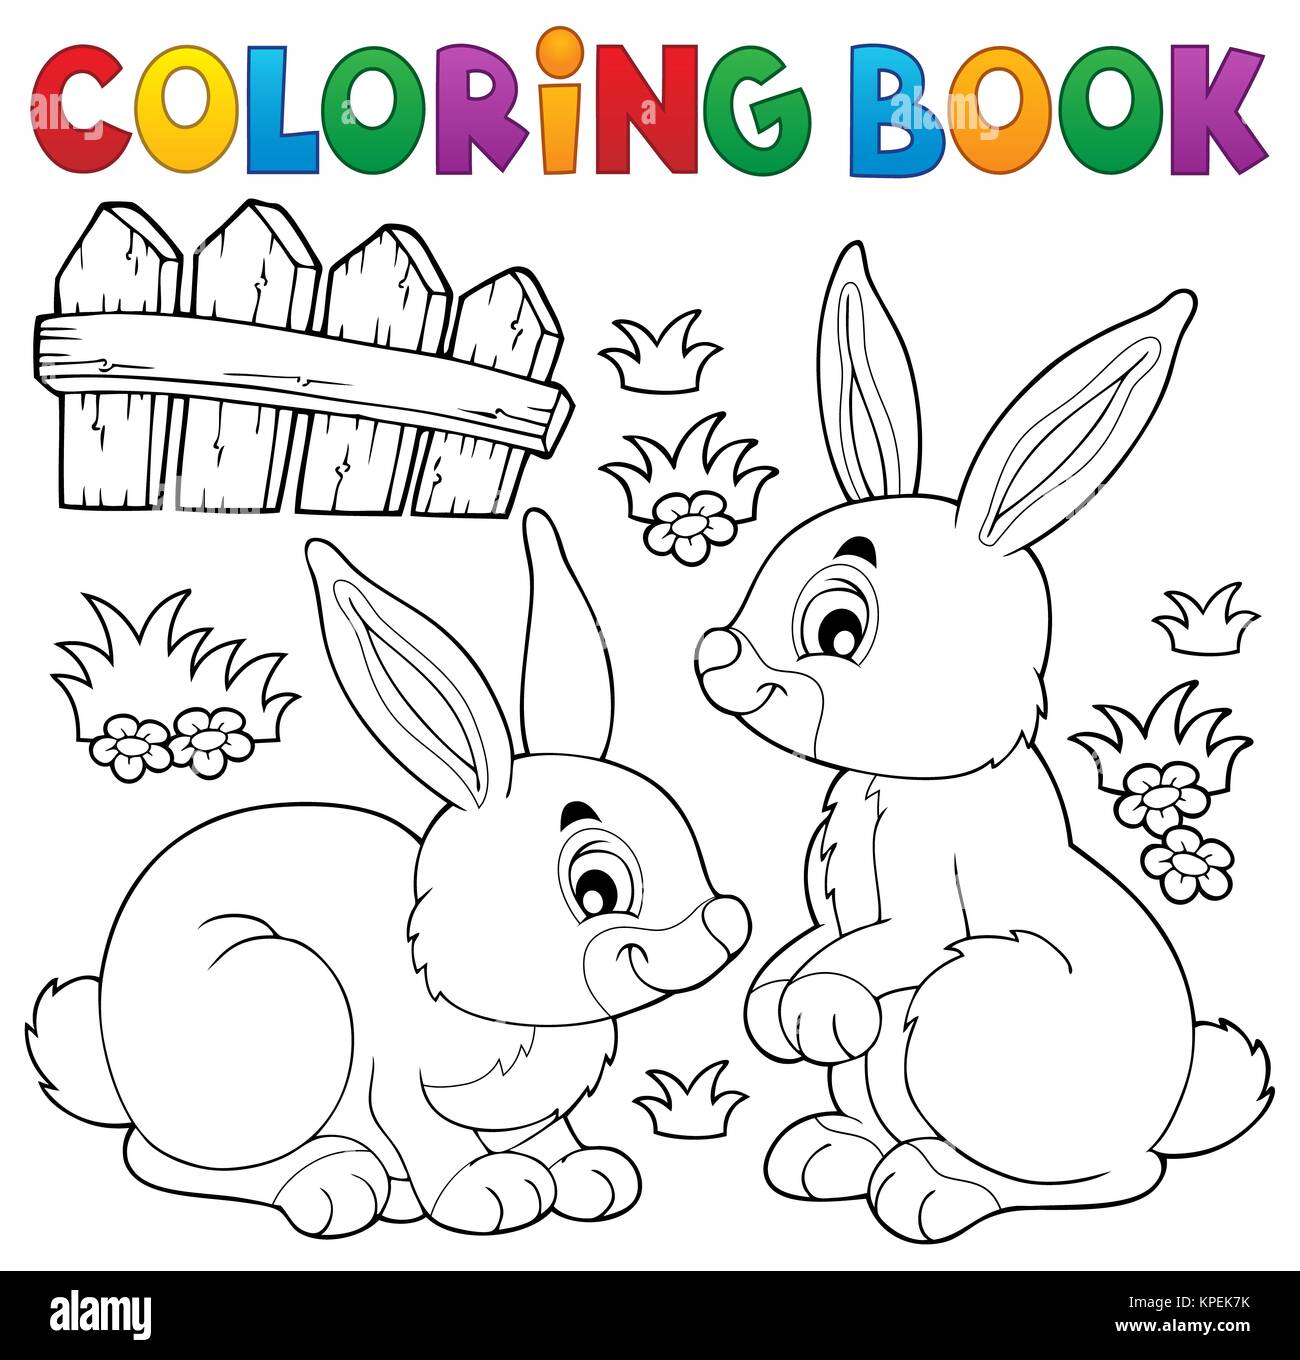 Coloring book rabbit topic 1 Stock Photo